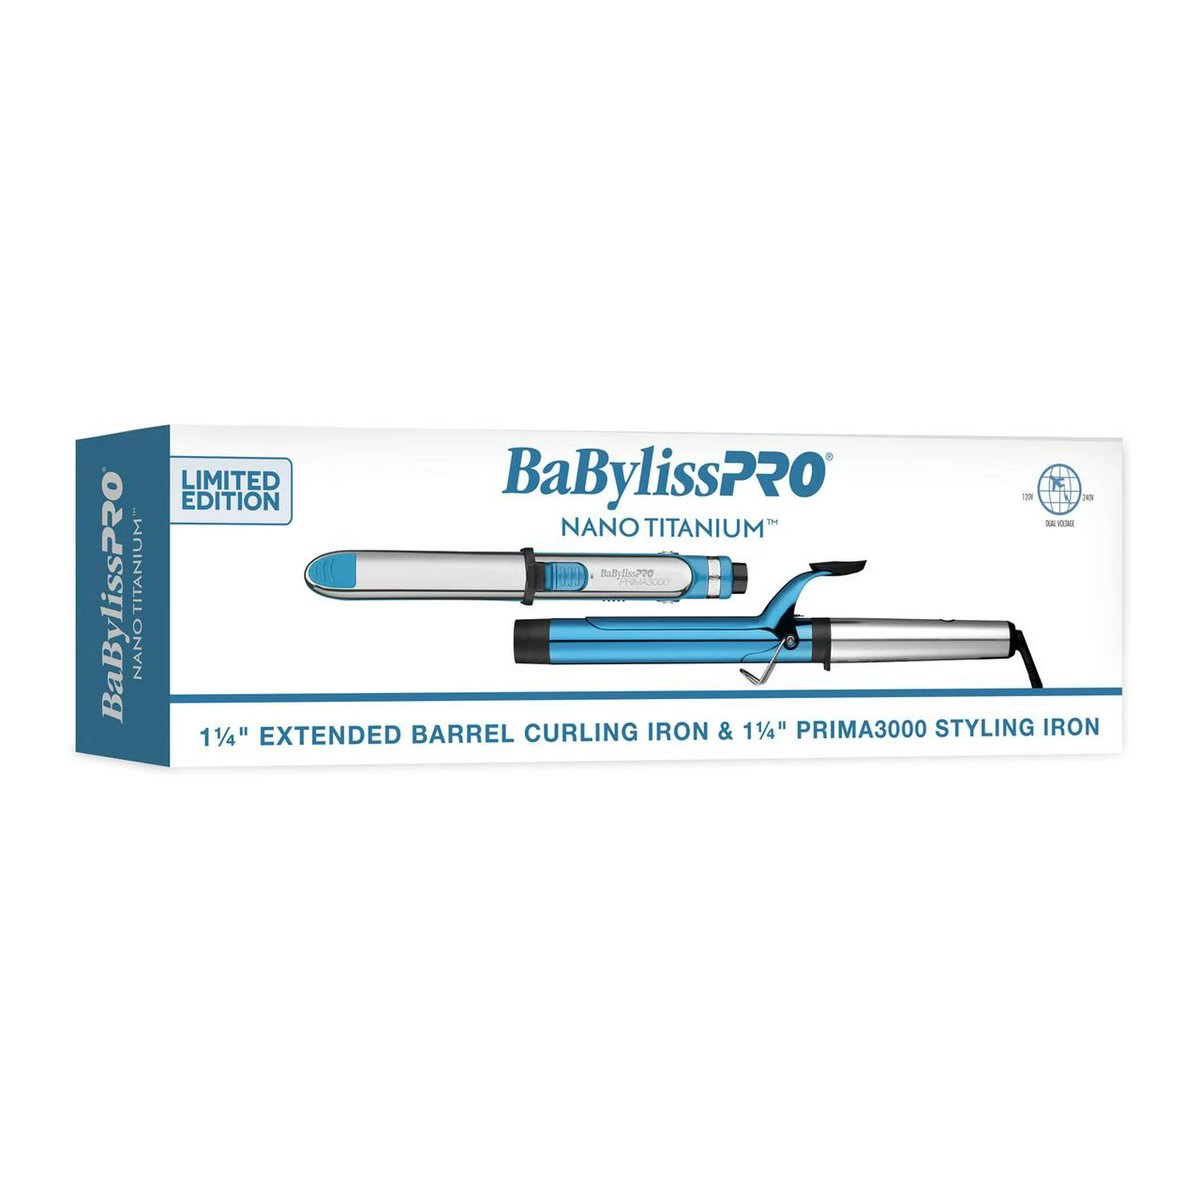 Get $47.00 off BabylissPRO Nano Titanium Styling Prepack - BNTW125XLUC & BNT3000TUC for $127.99

sovrn.co/1mtez8v

#BabylissPRO #Titanium #Prepack